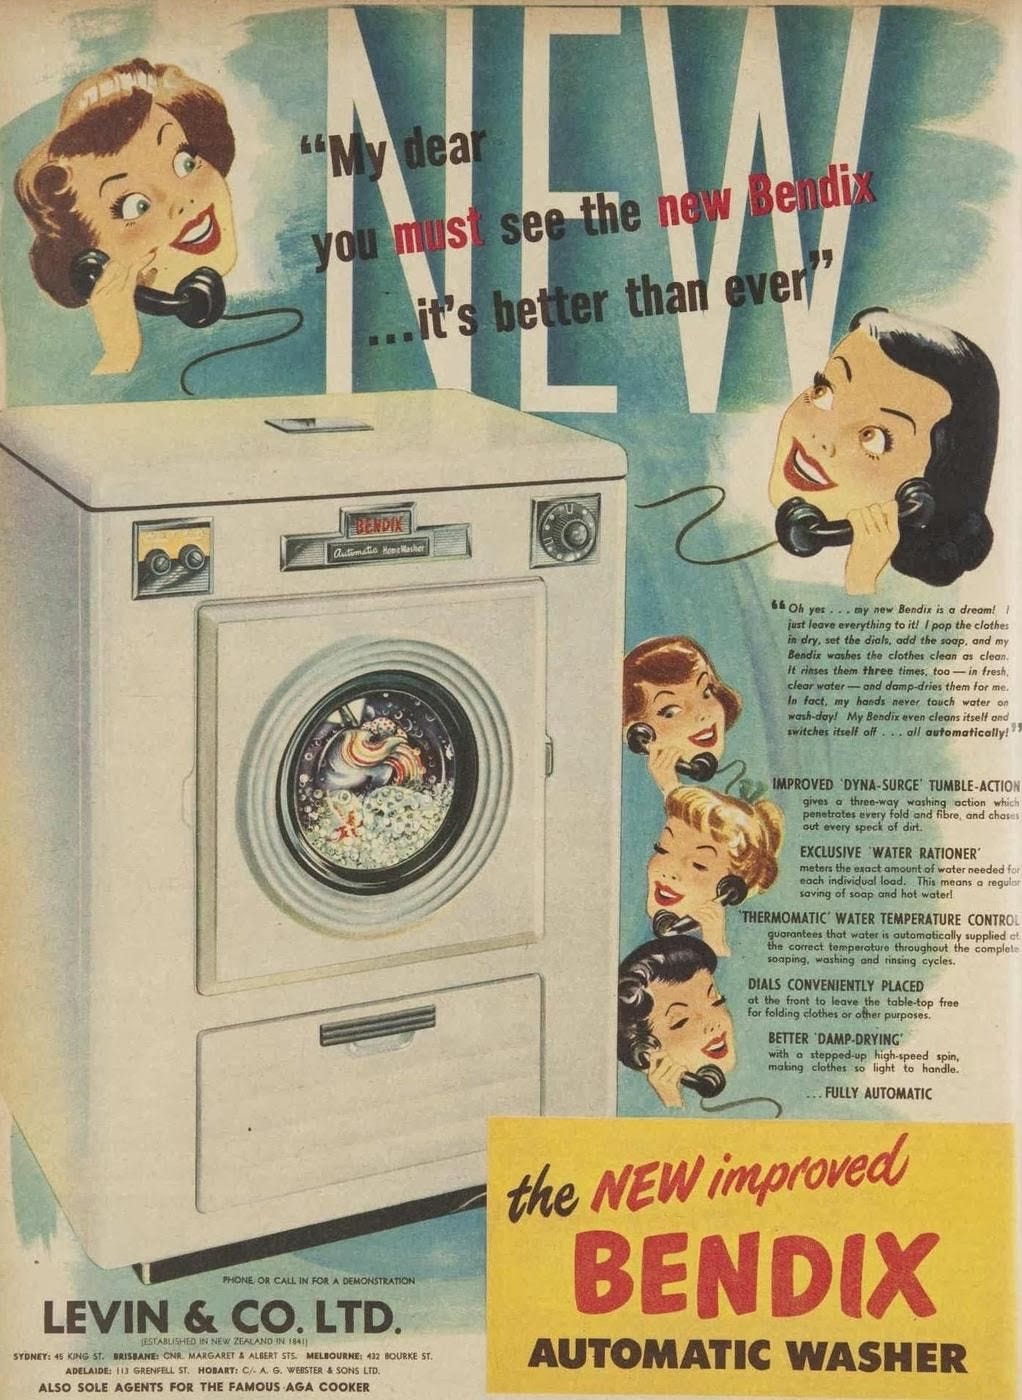 An advert for a Bendix washing machine.